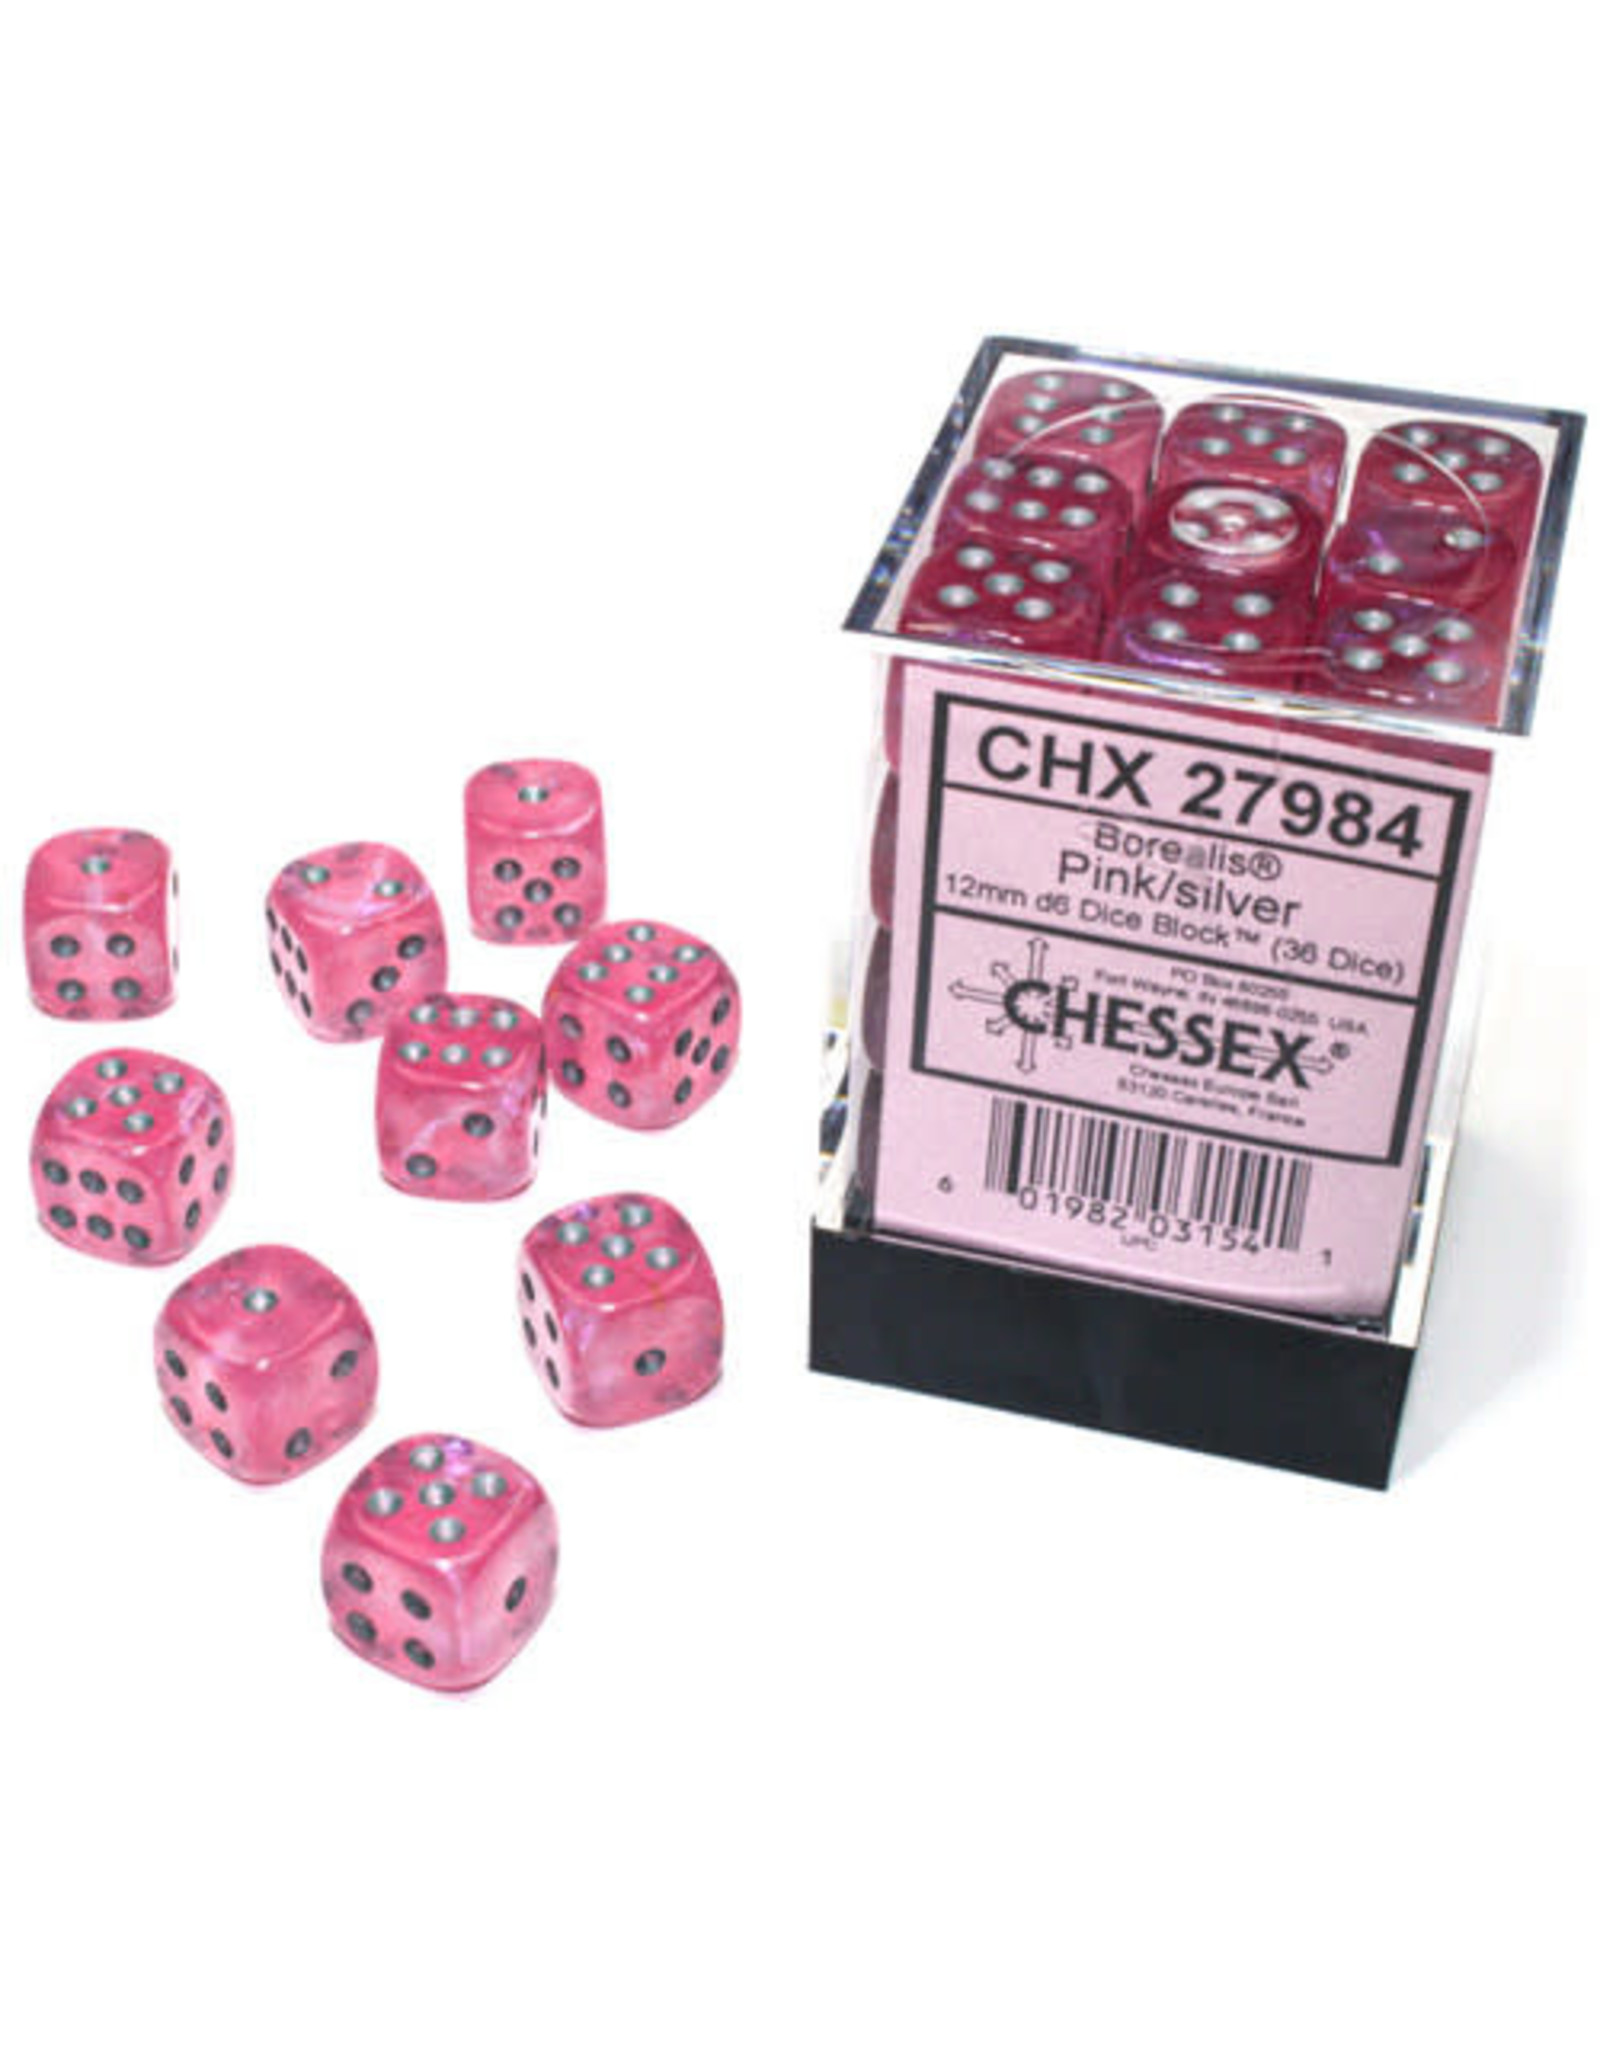 Chessex Borealis: 12mm d6 Pink/silver Luminary Dice Block (36 dice) CHXDB1284